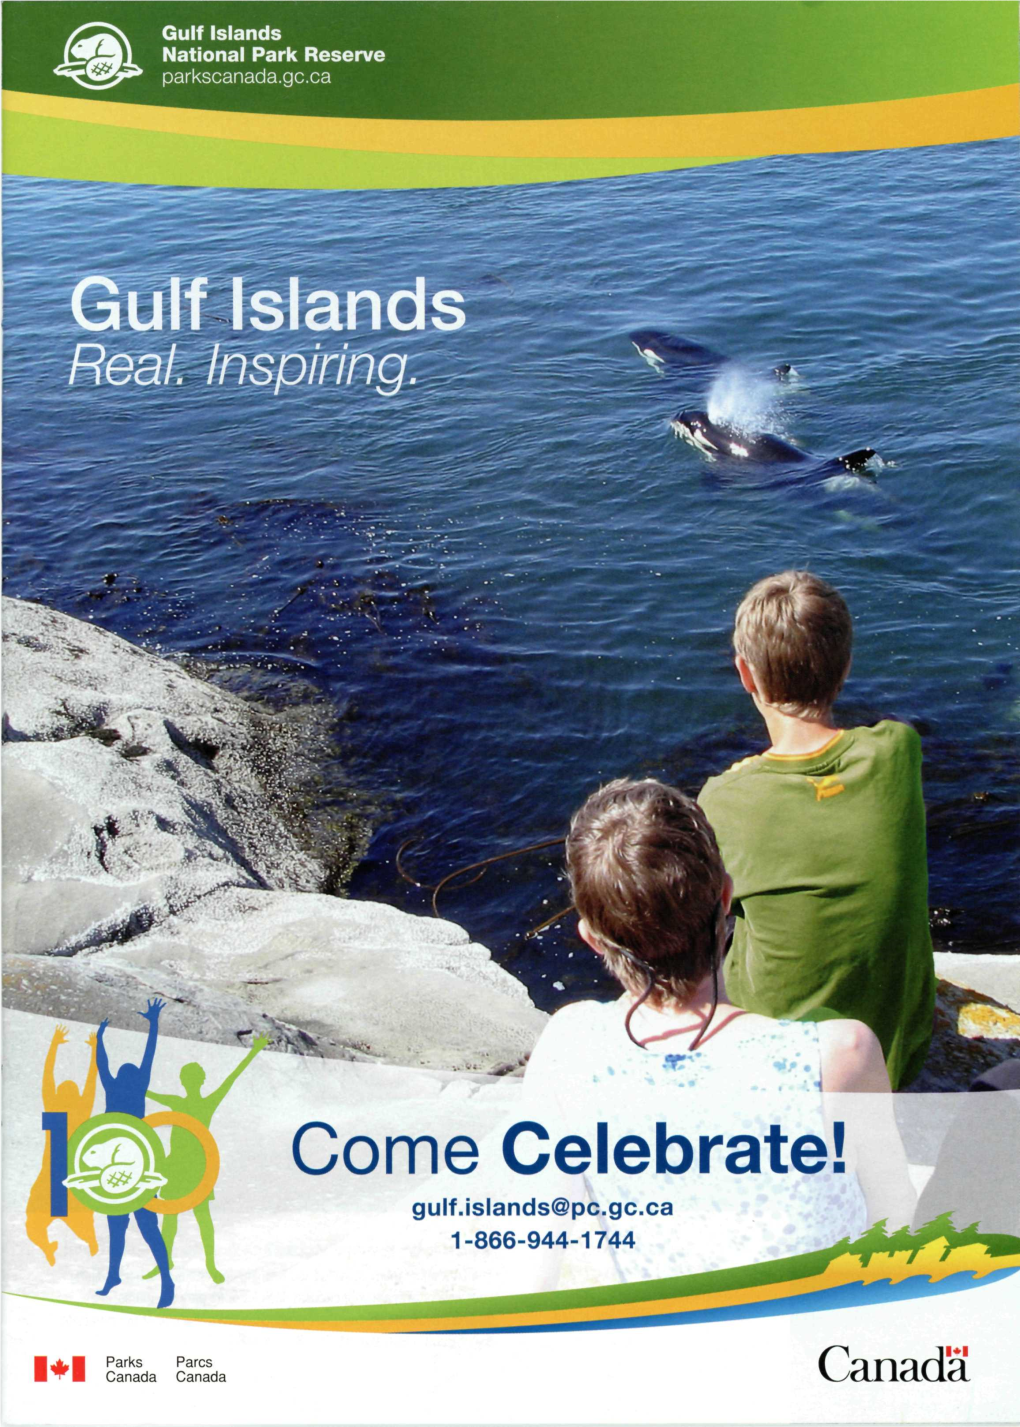 Come Celebrate! Gulf.Islands@Pc.Gc.Ca 1-866-944-1744